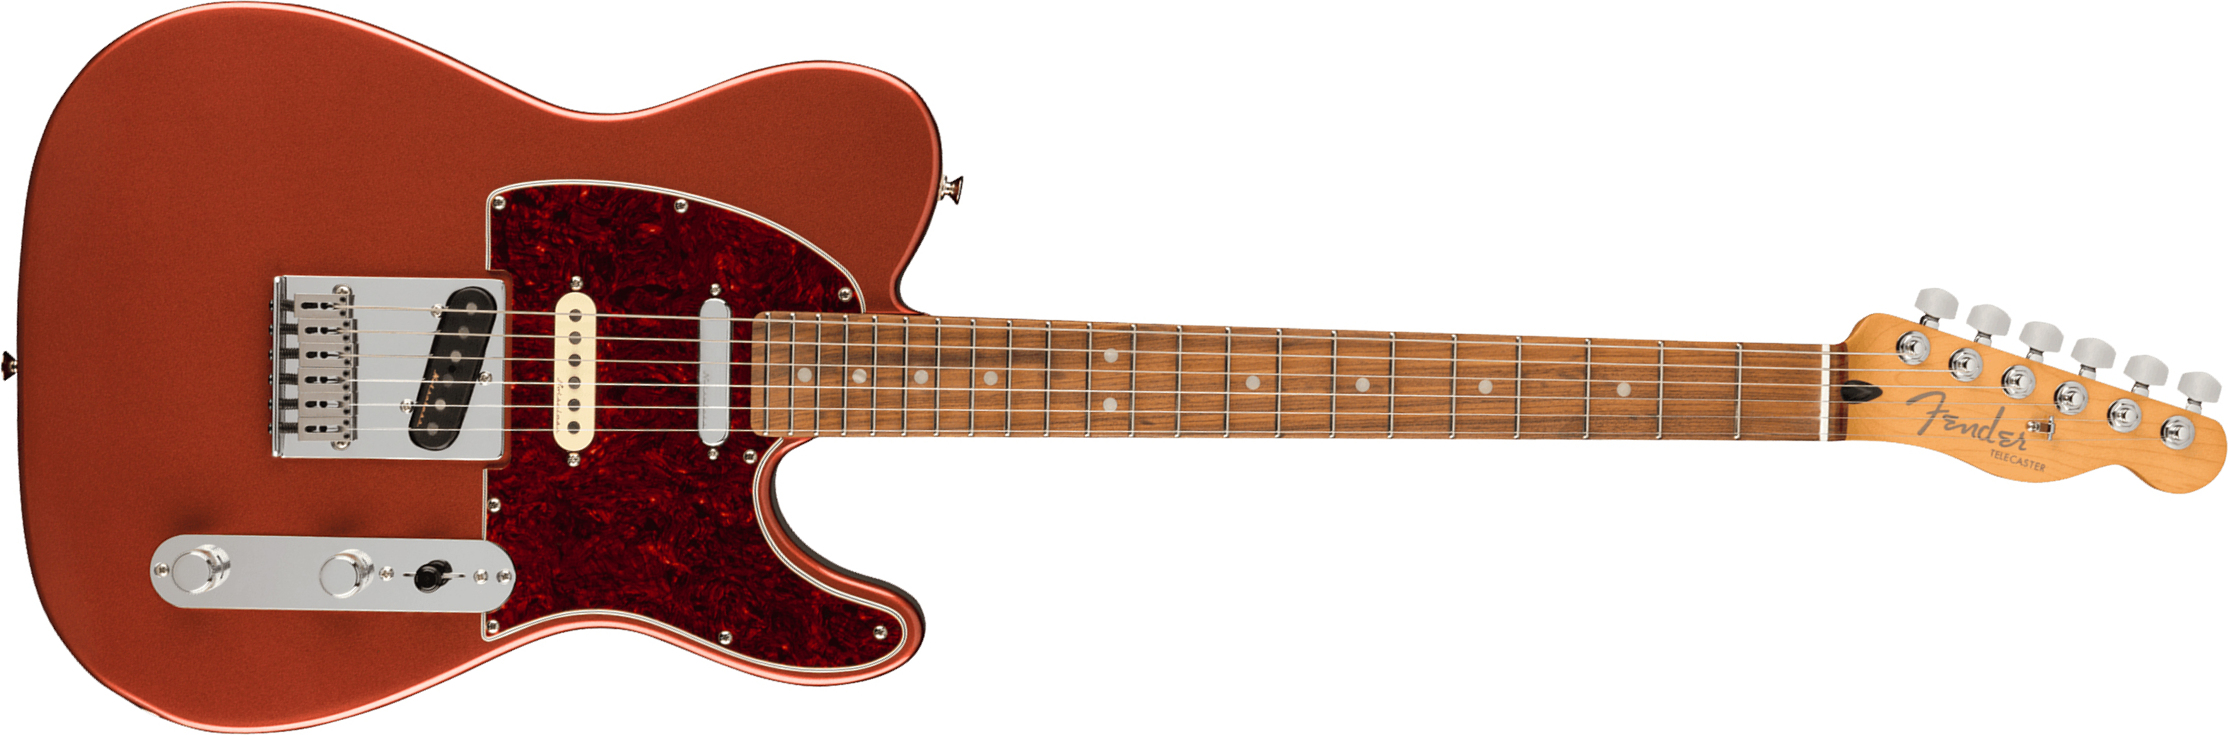 Fender Tele Player Plus Nashville Mex 3s Ht Pf - Aged Candy Apple Red - Guitarra eléctrica con forma de tel - Main picture